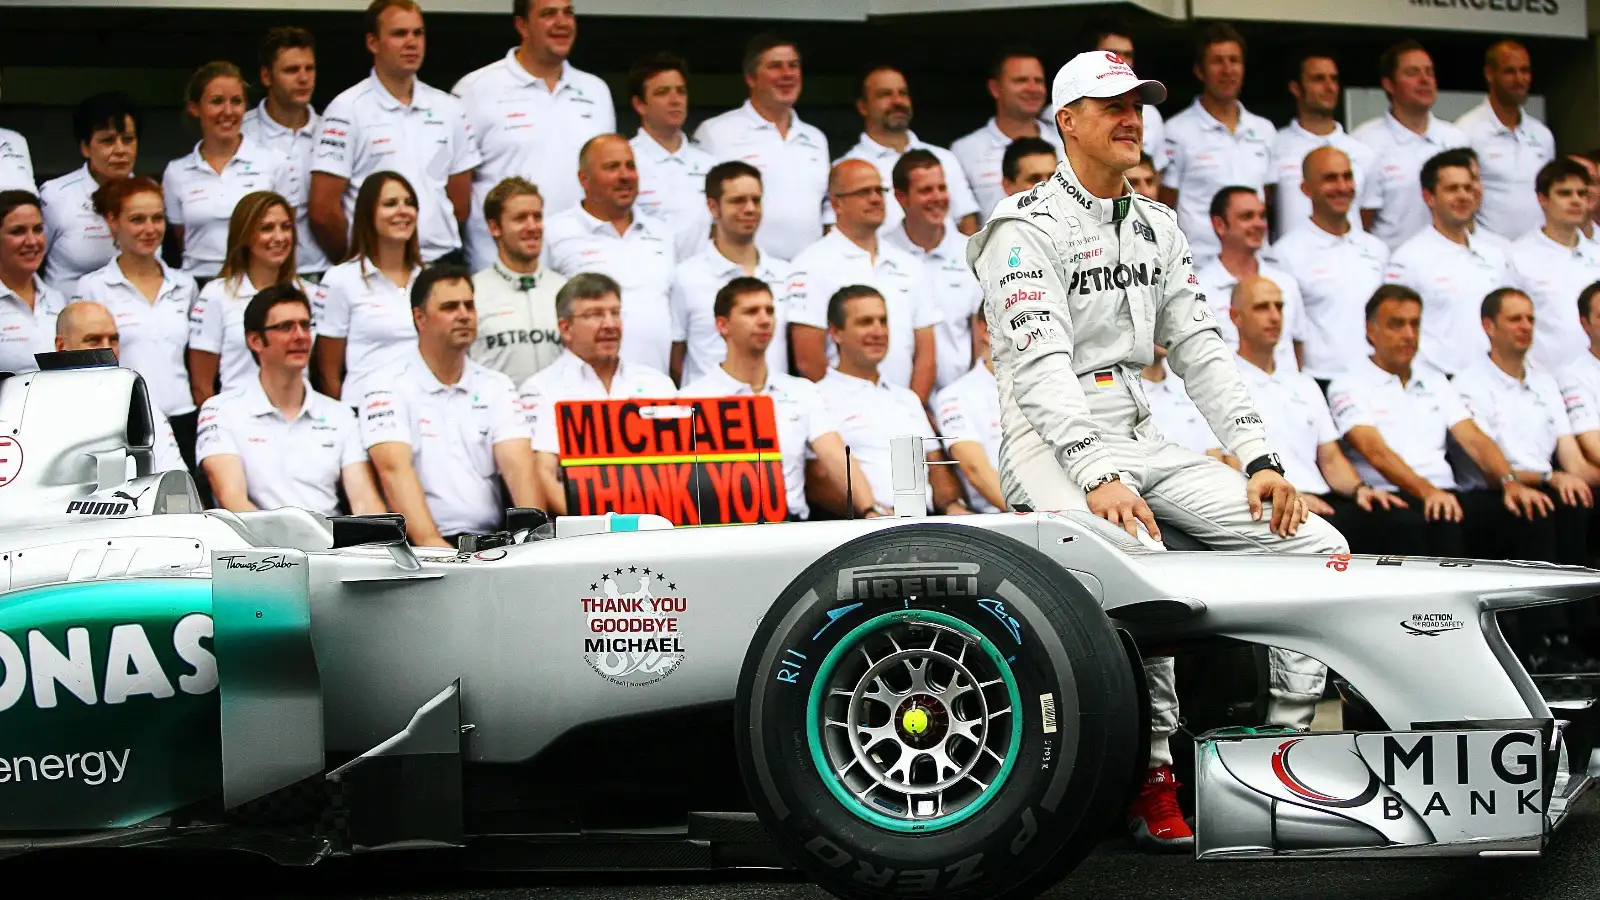 Michael Schumacher in front of the Mercedes team.